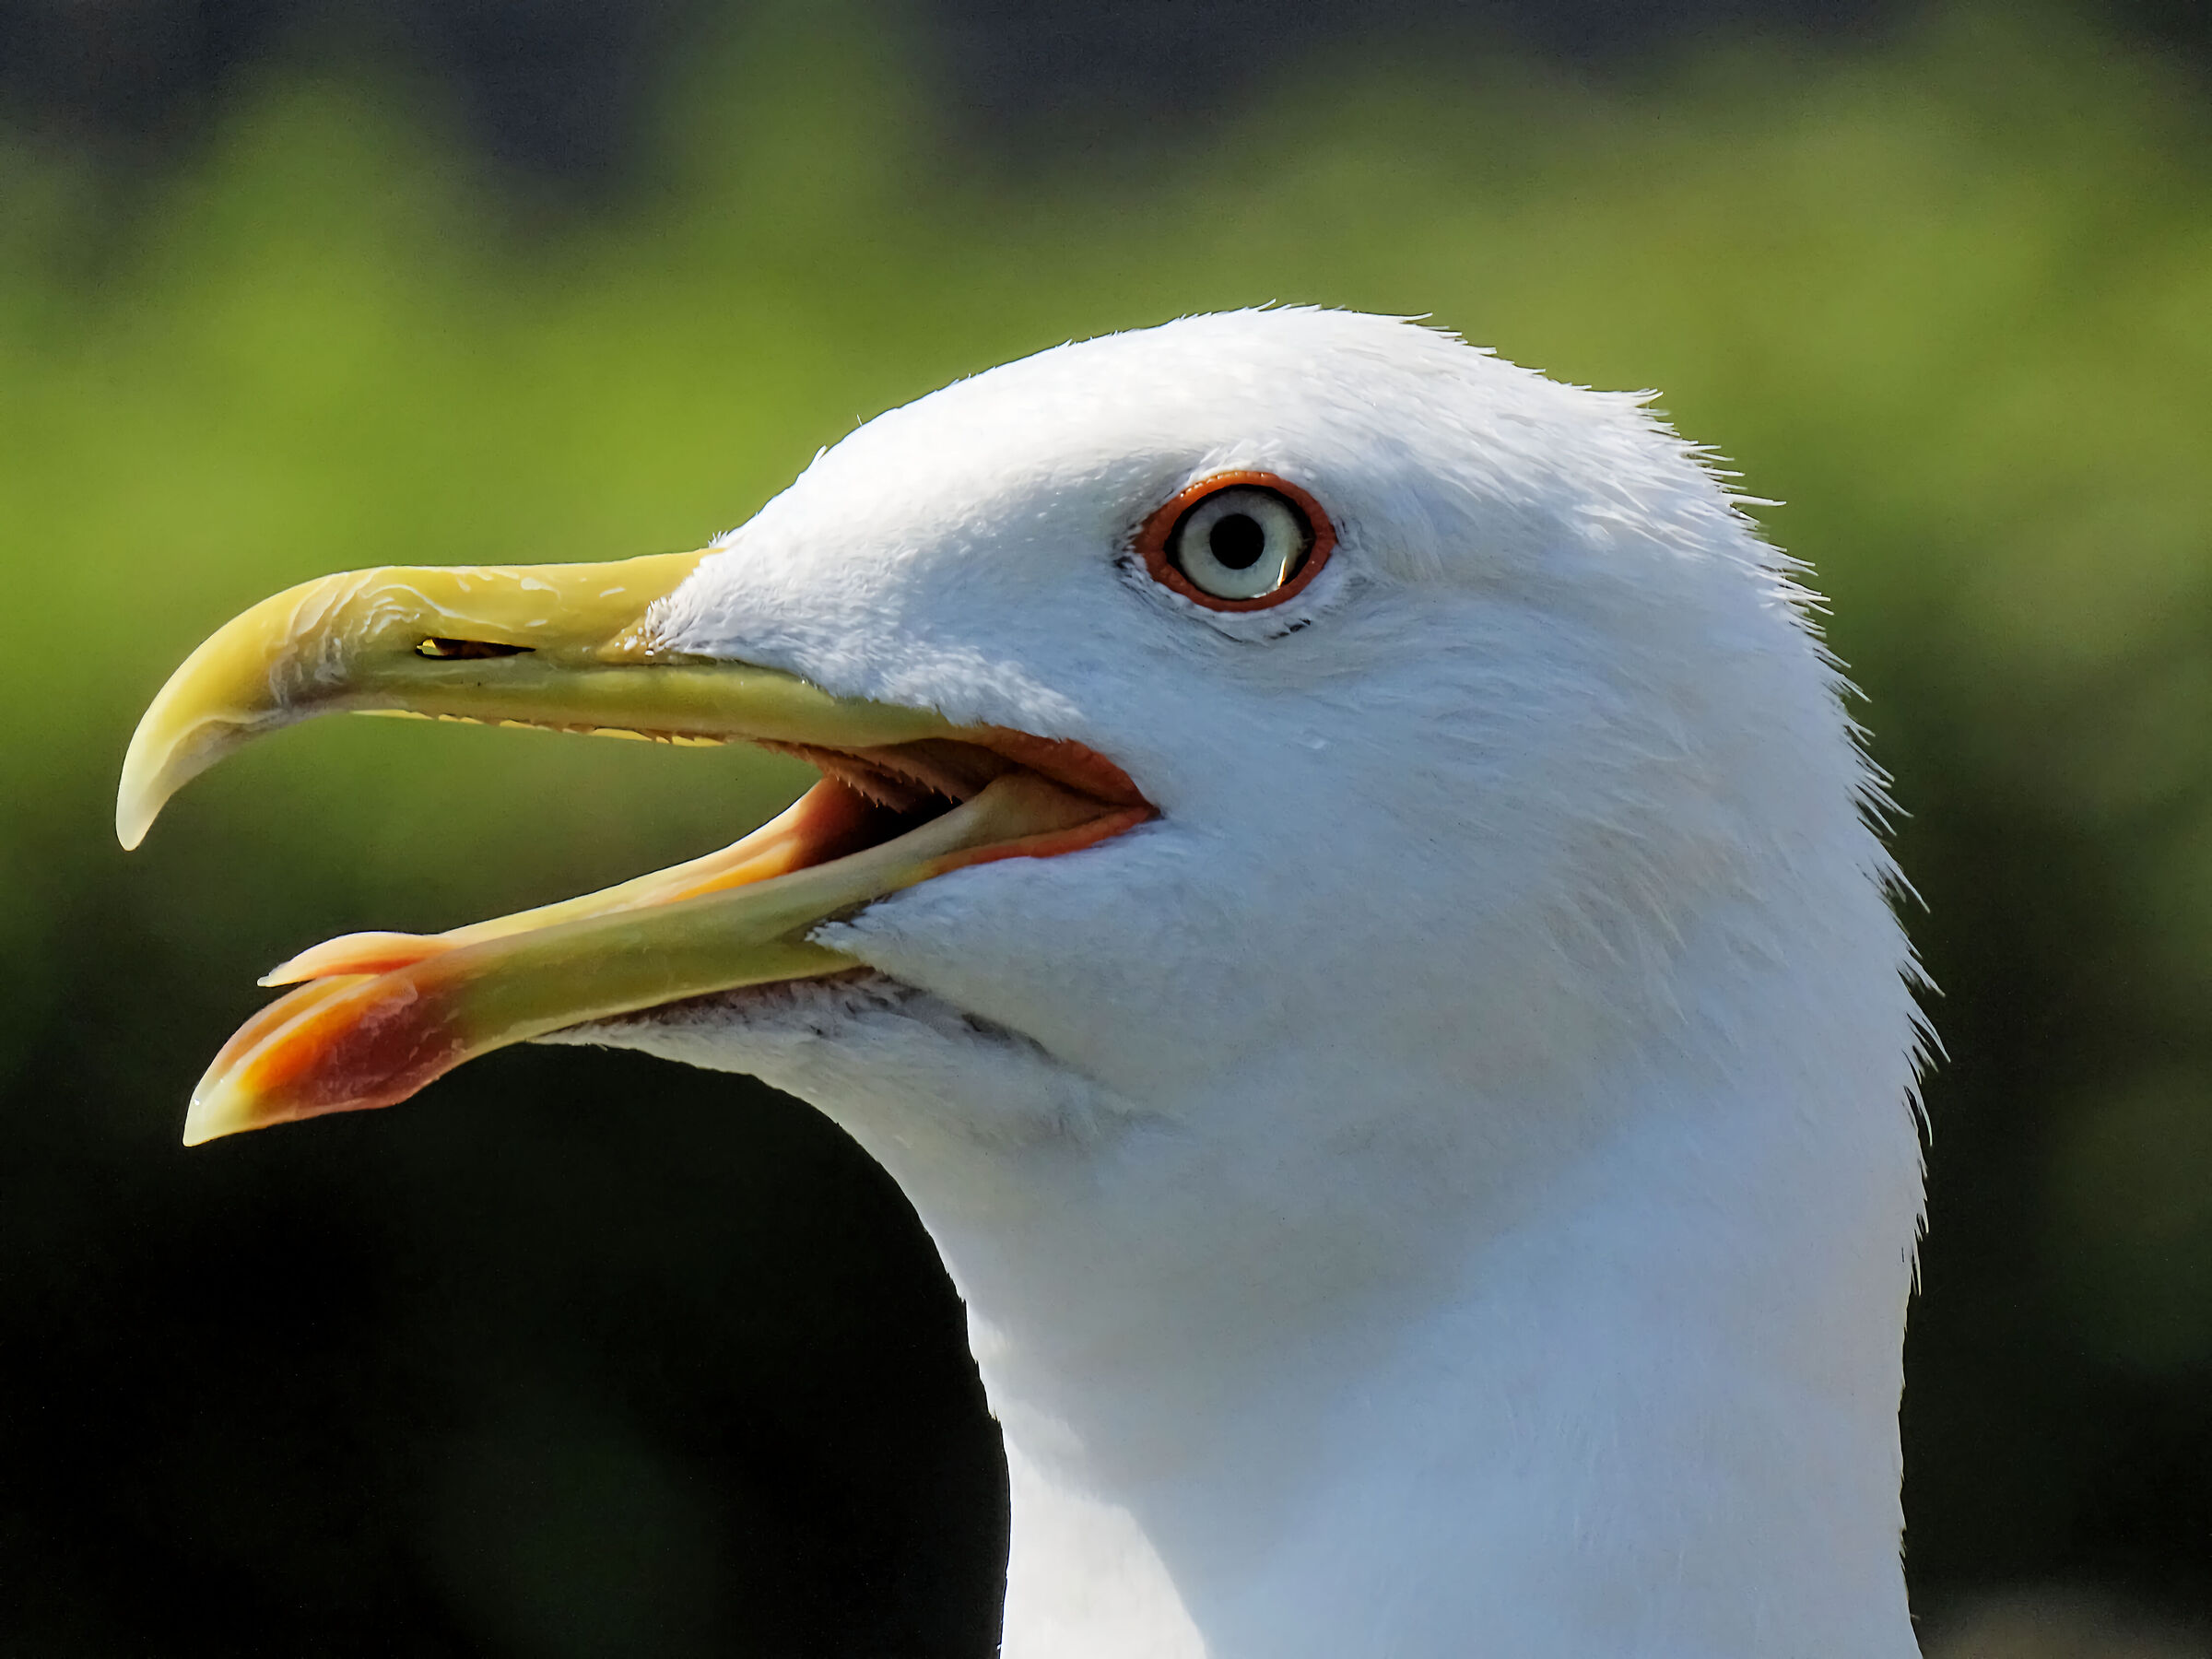 Seagull Portrait - 50X crop.1,0...